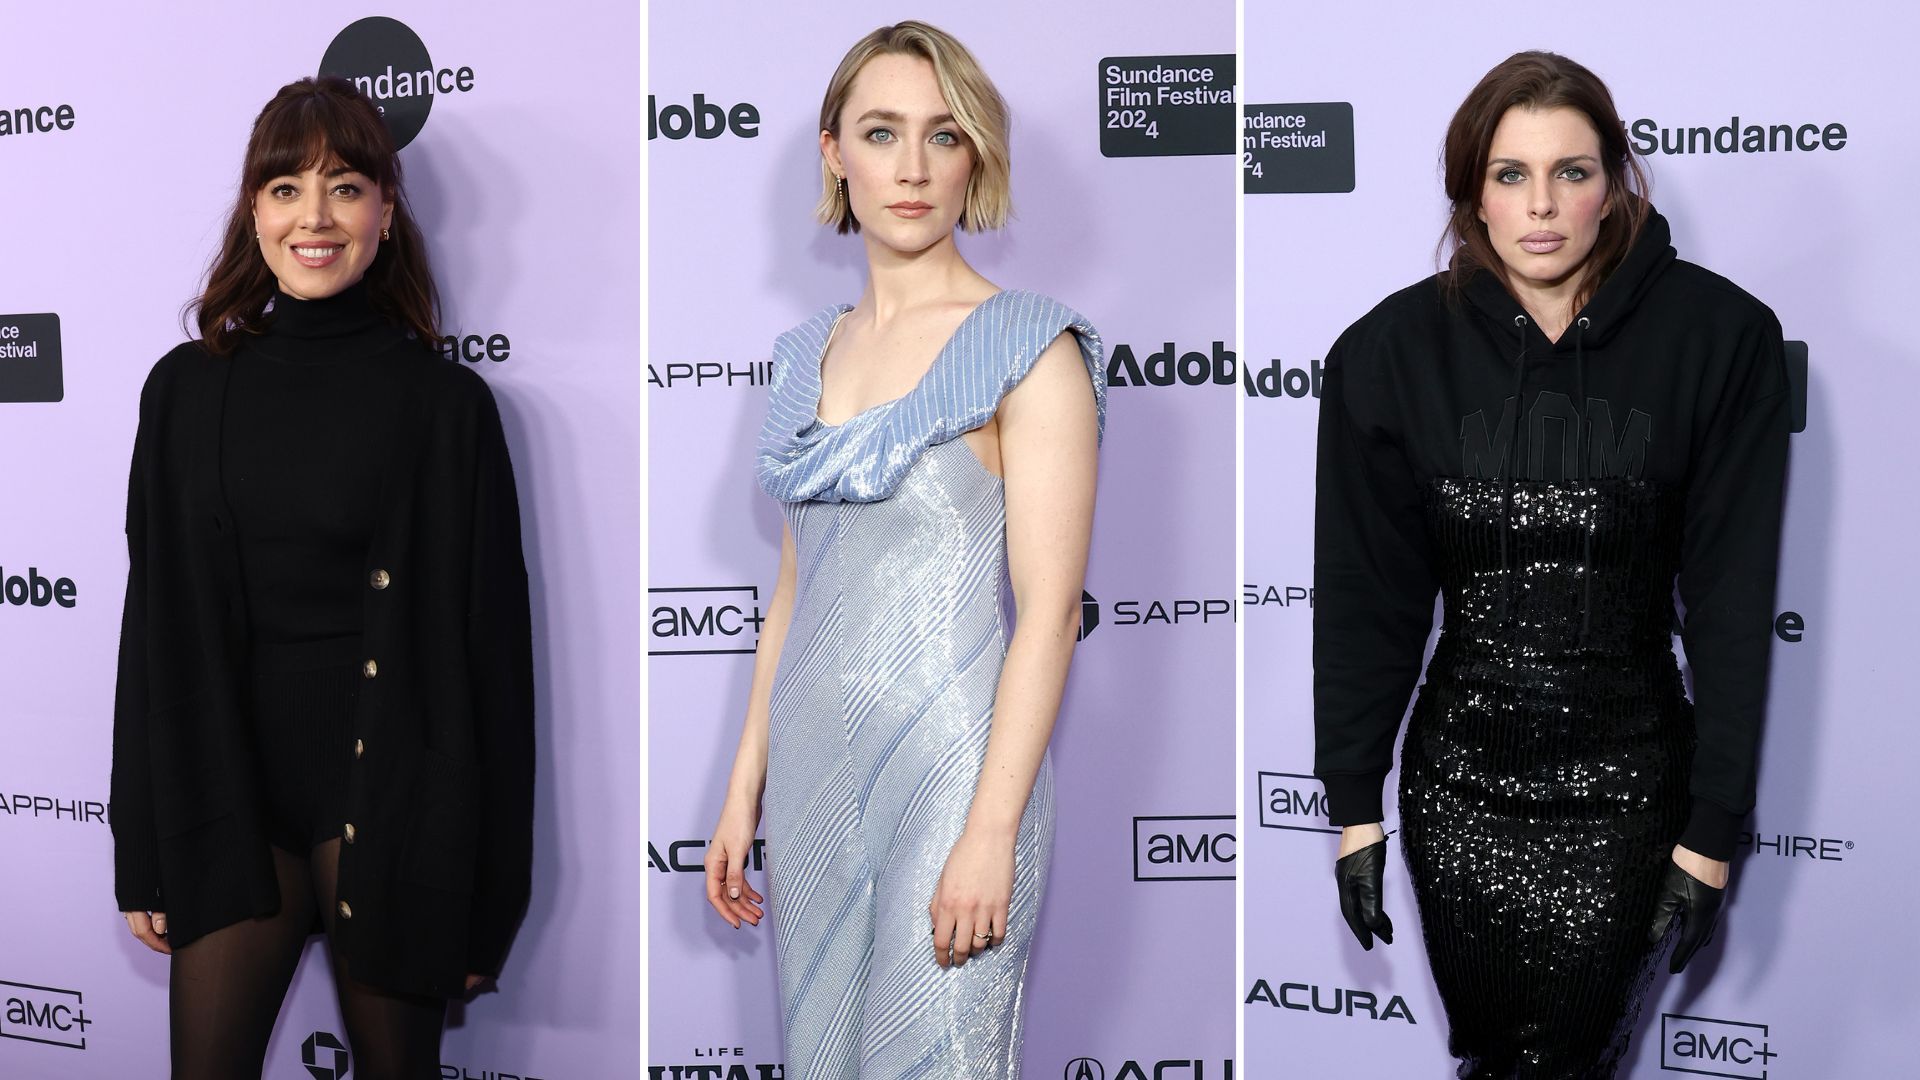 The best-dressed celebrities at Sundance Film Festival 2024